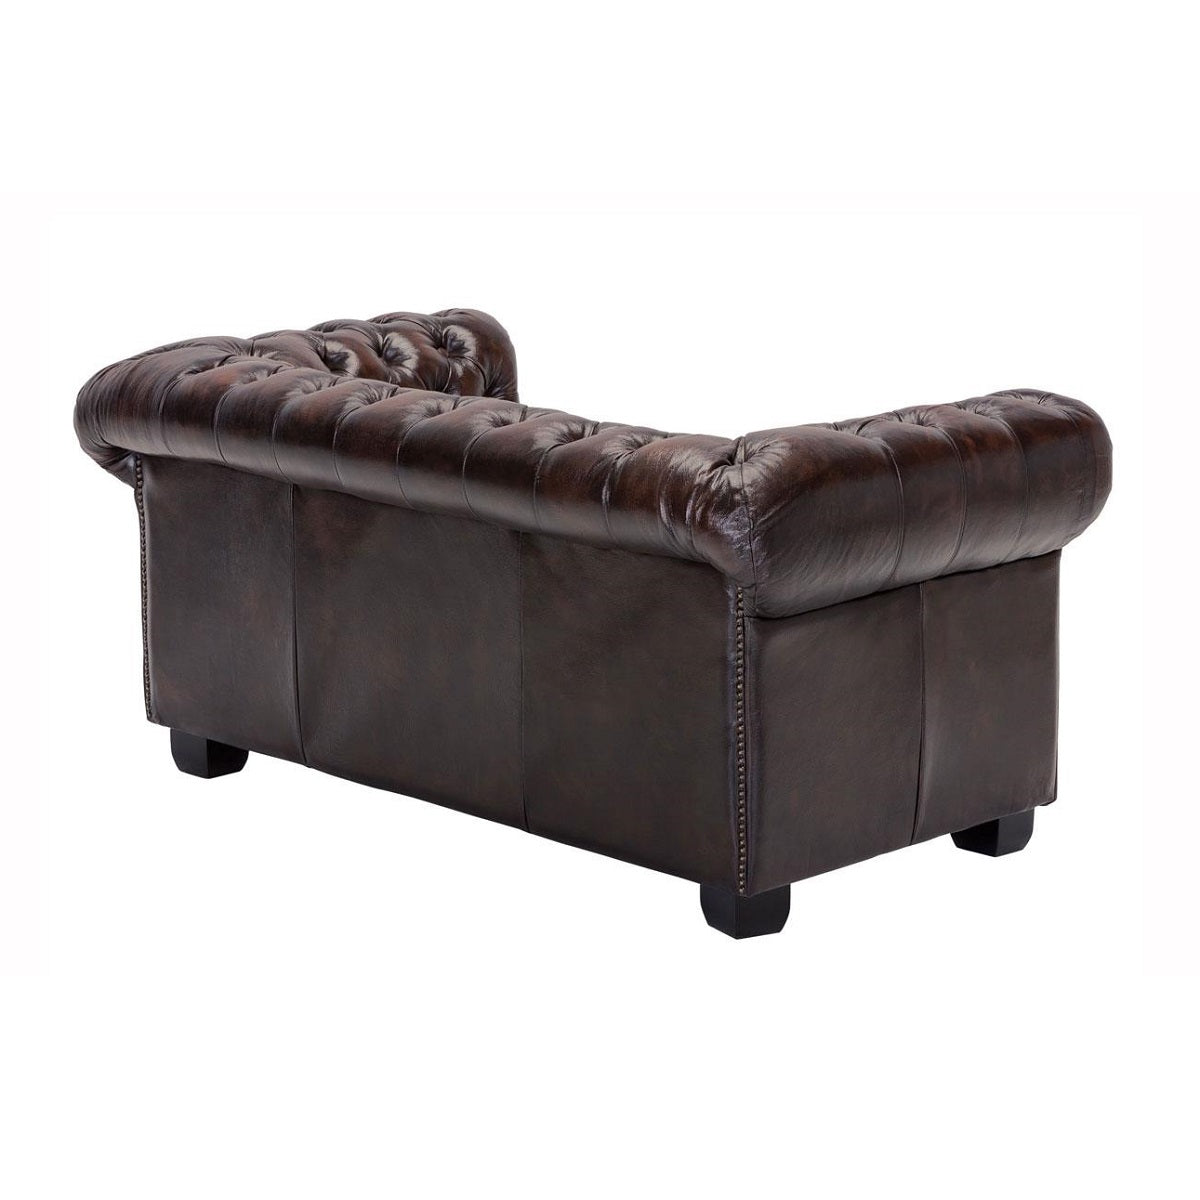 
                  
                    Sofa 2-sitzer Leder / Rindsleder antik braun Vintage Chesterfield
                  
                